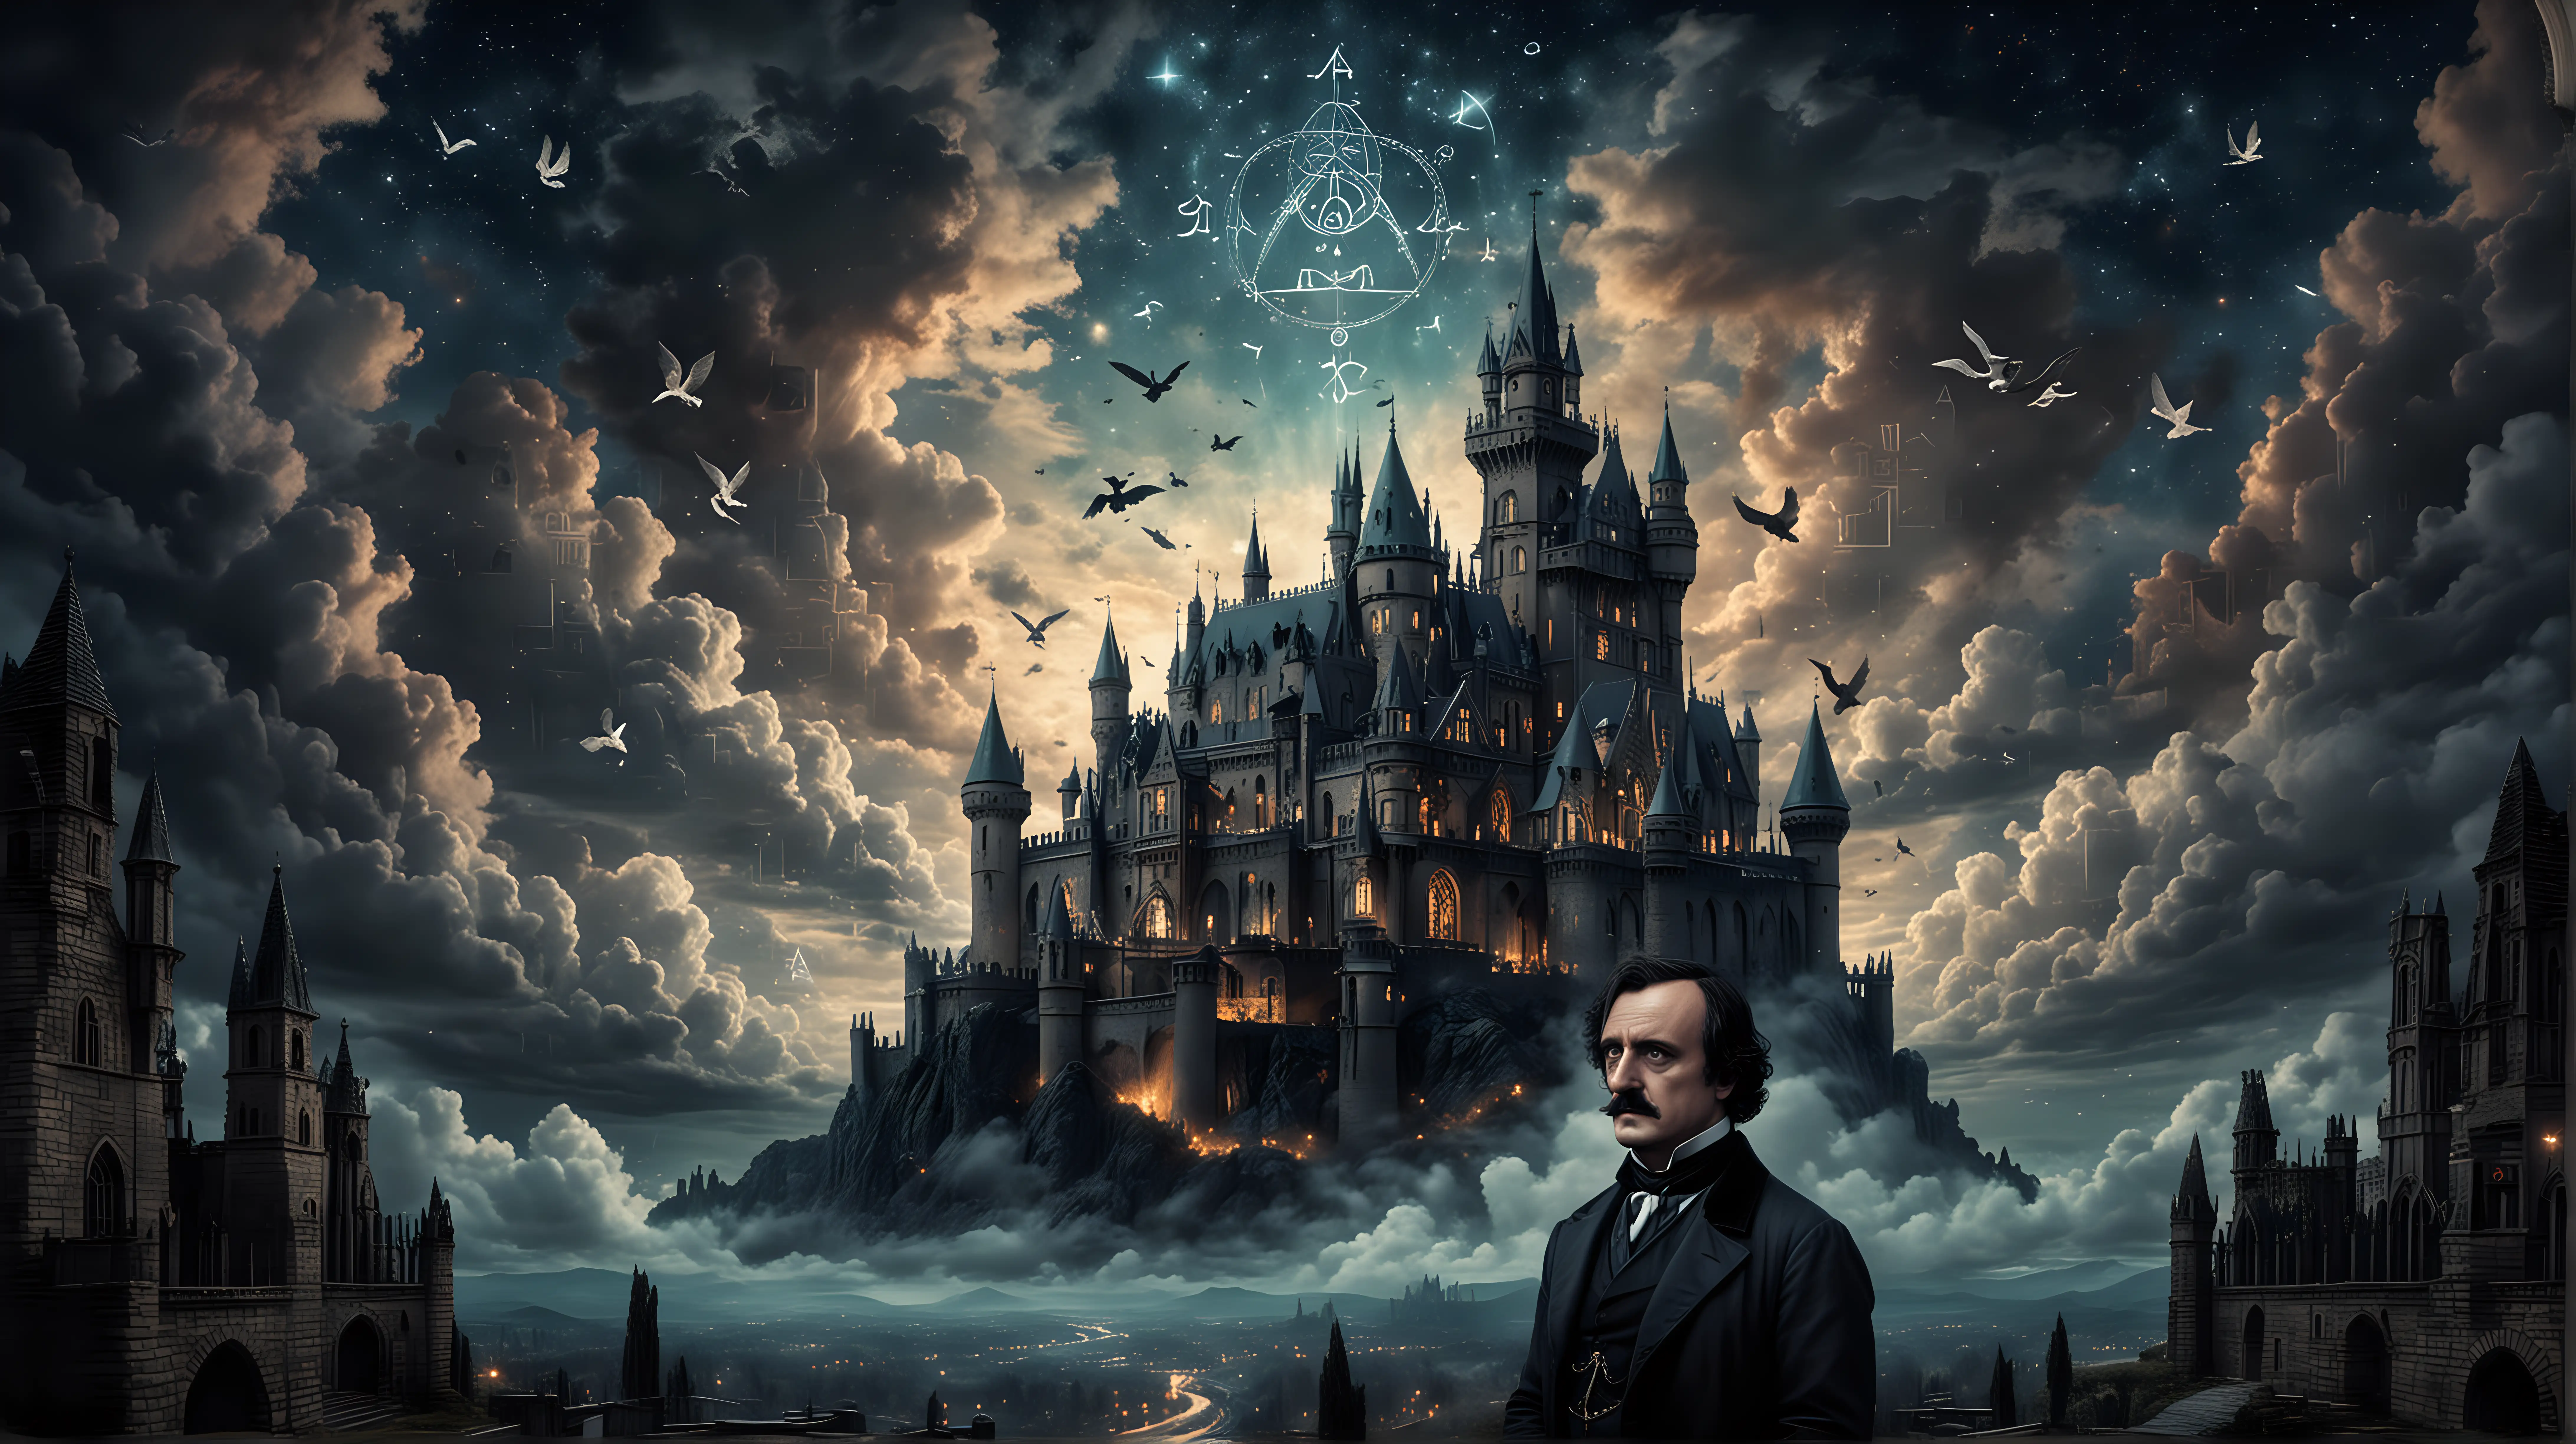 Edgar Allan Poe Posing by Eerie Gothic Castle Amidst Enigmatic Enochian Symbols